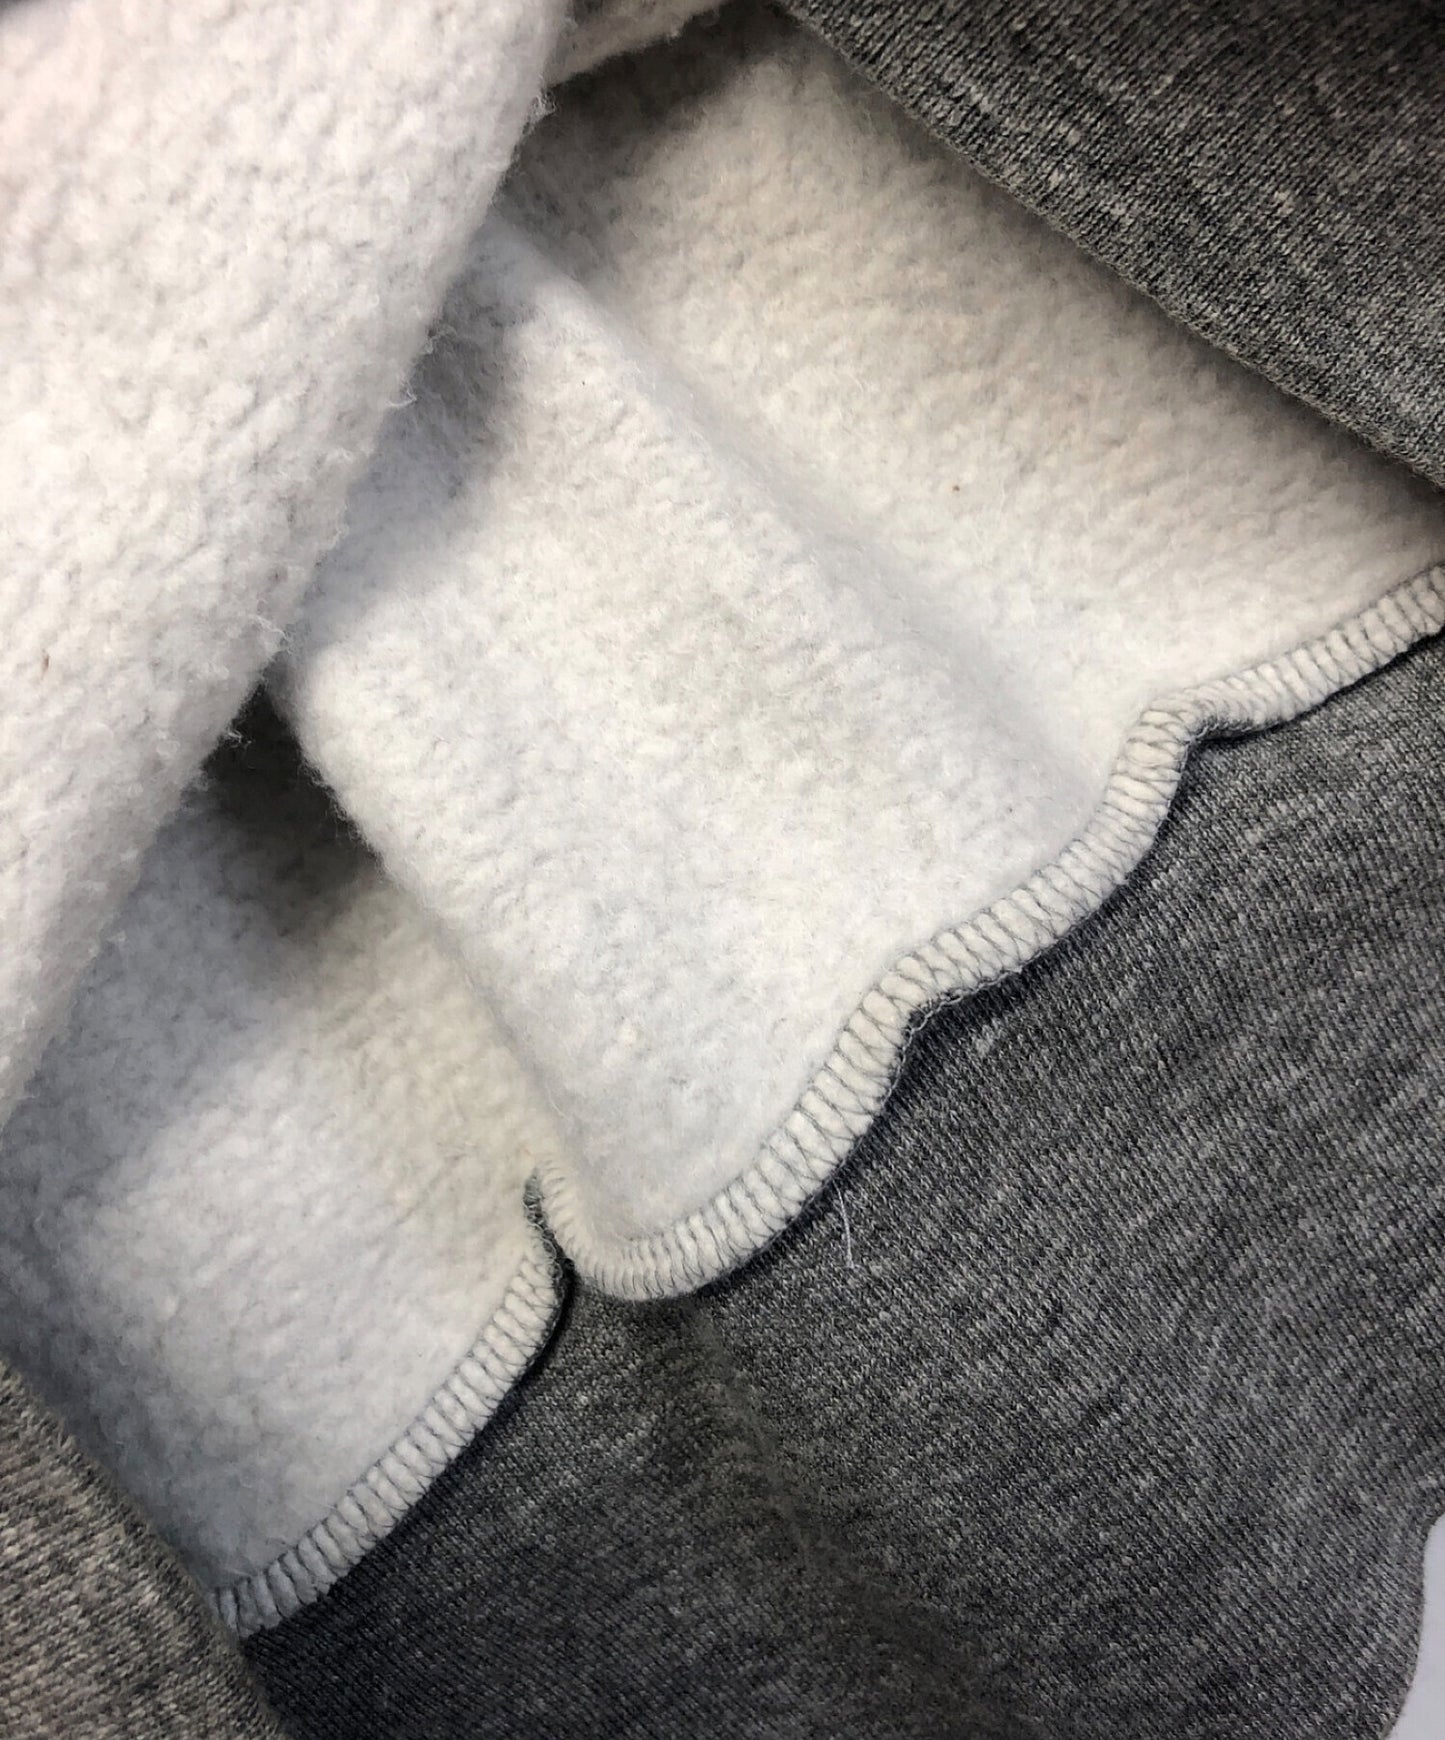 [Pre-owned] HUMAN MADE raglan sweatshirt